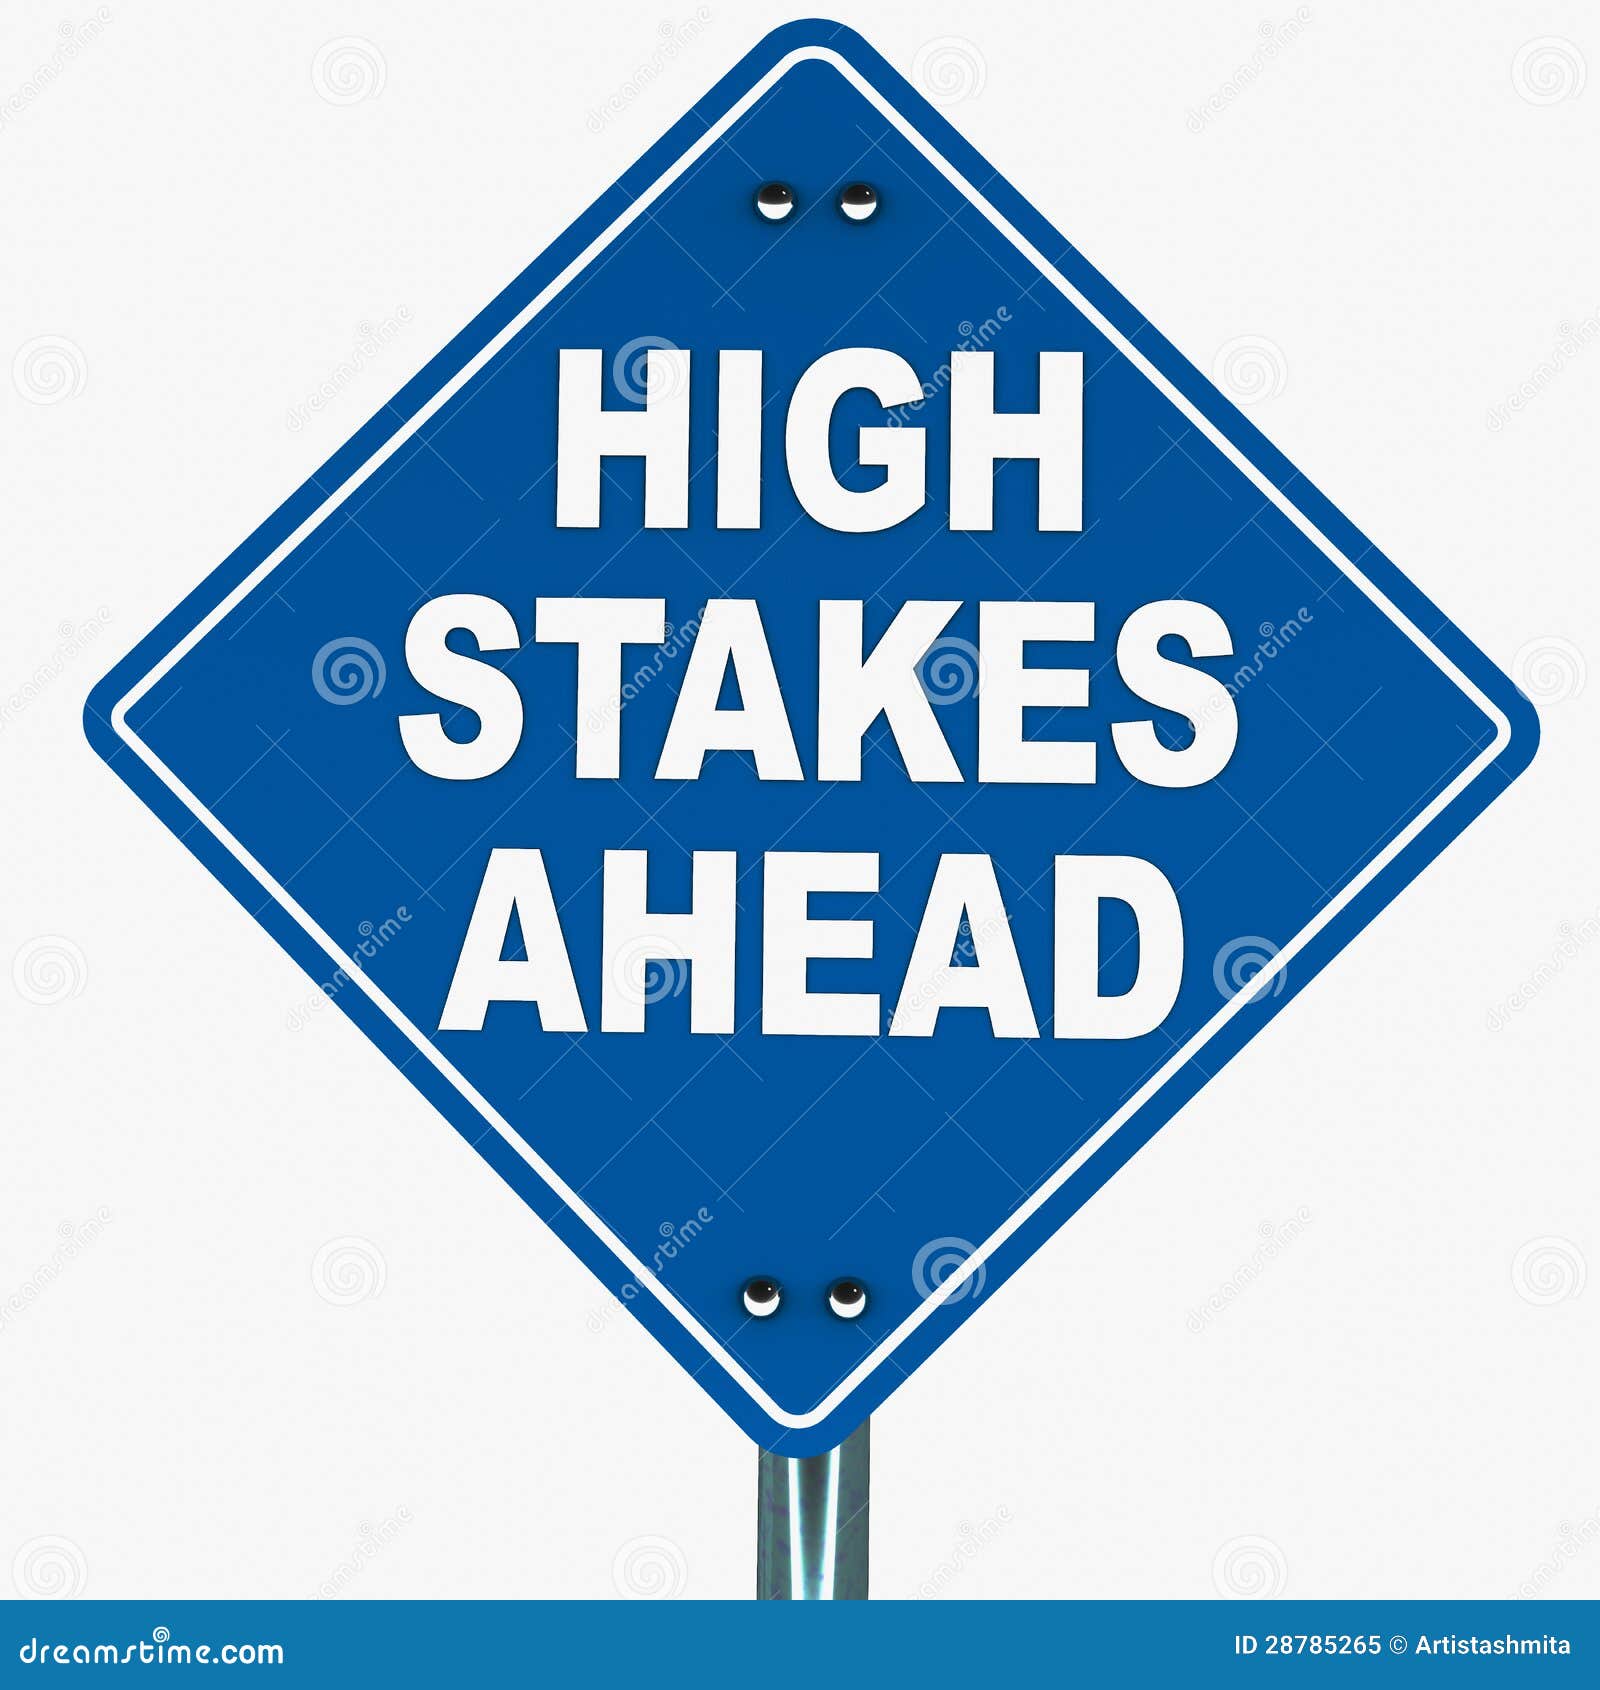 high-stakes-ahead-28785265.jpg